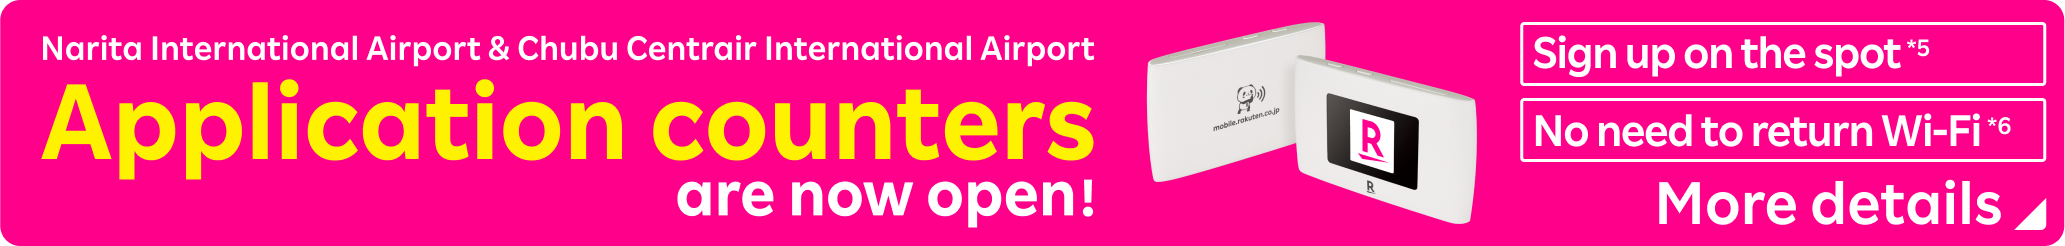 Narita International Airport & Chubu Centrair International Airport Application counters are now open!